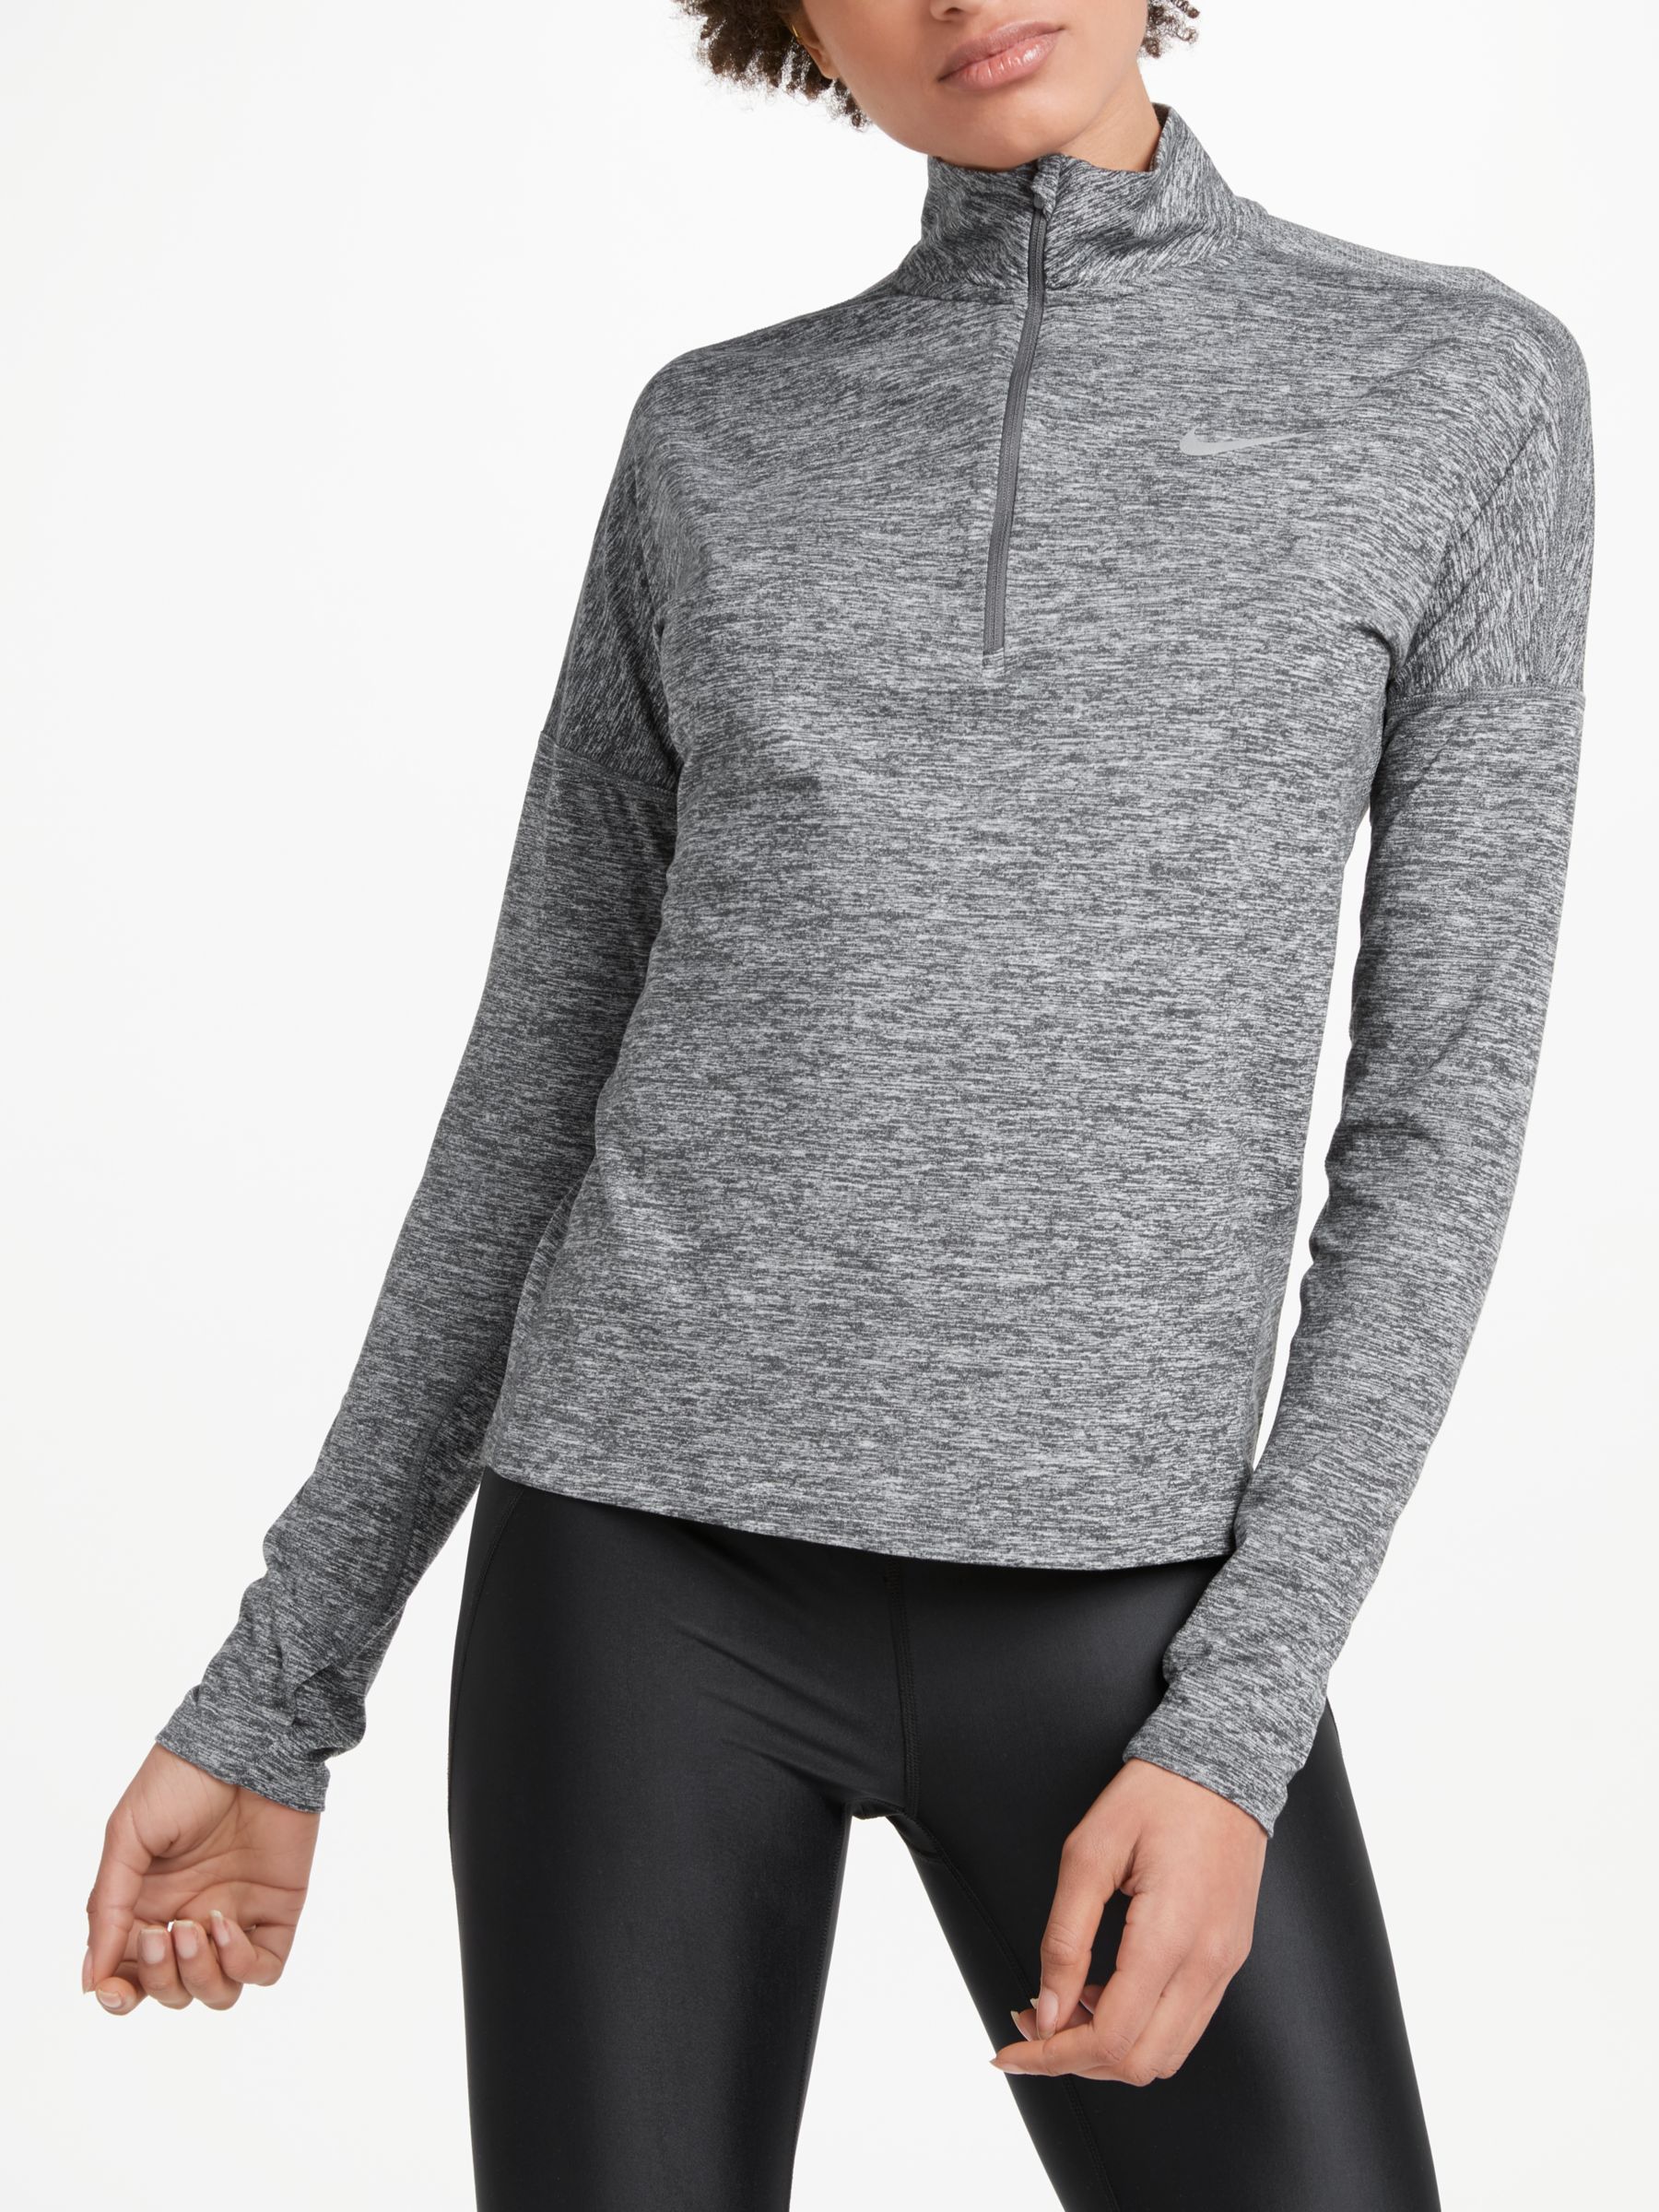 Nike Dry Element Long Sleeve Running T-Shirt, Dark Grey Heather, L